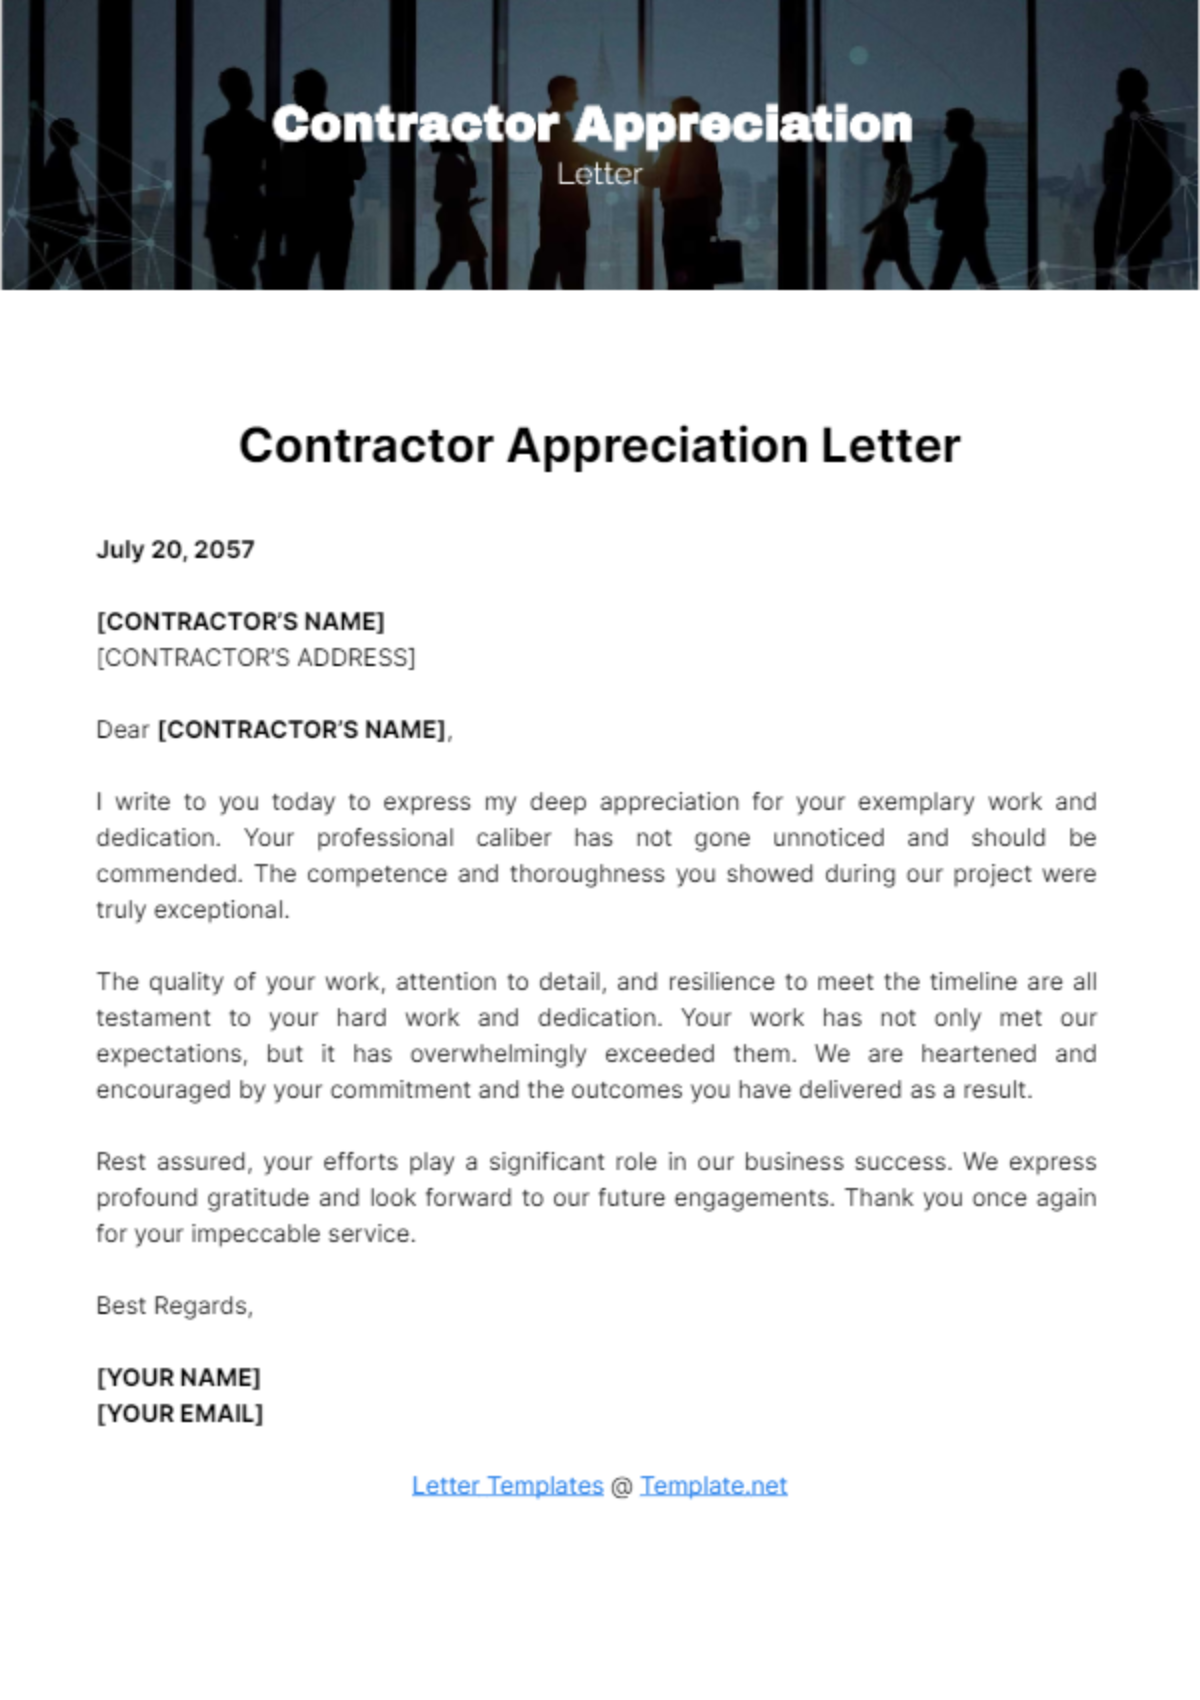 Free Contractor Appreciation Letter Template